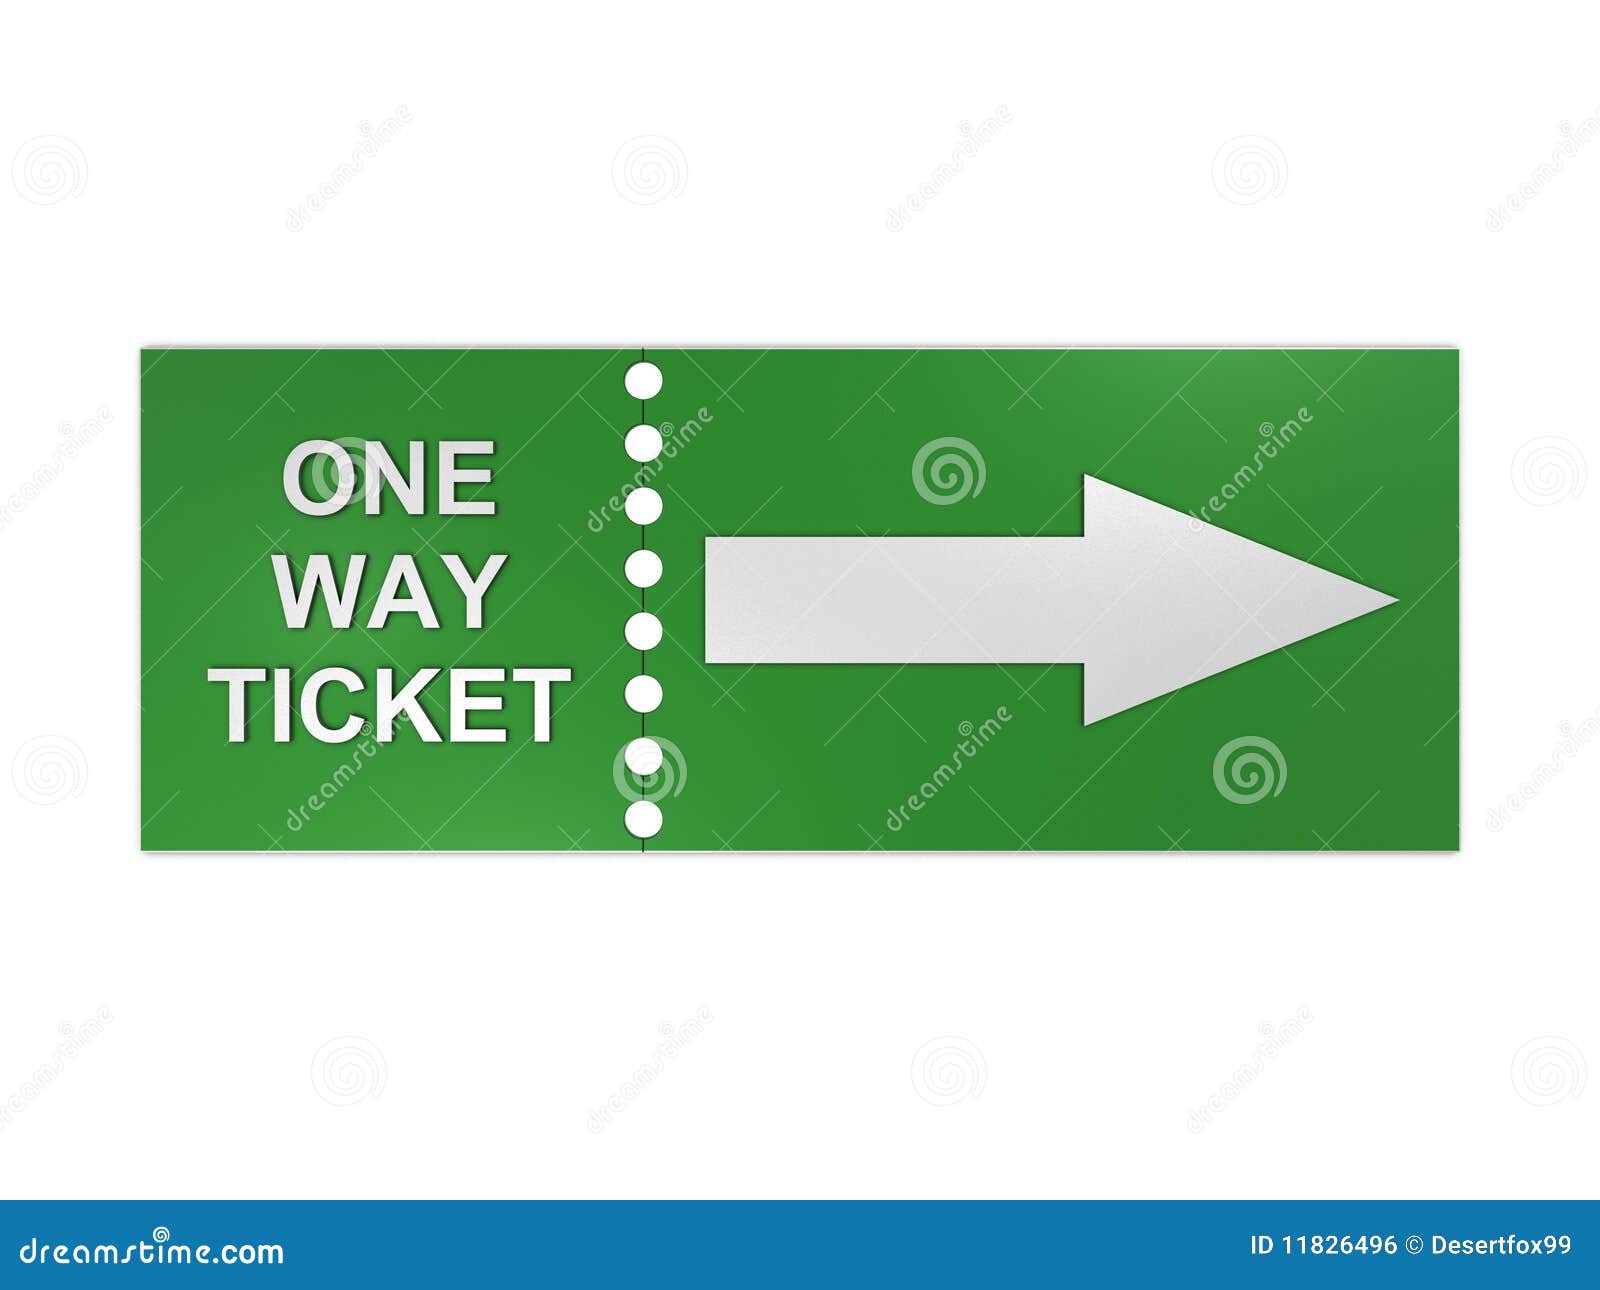 Переведи ticket. One way ticket текст. BSS Wiki ticket Planter.